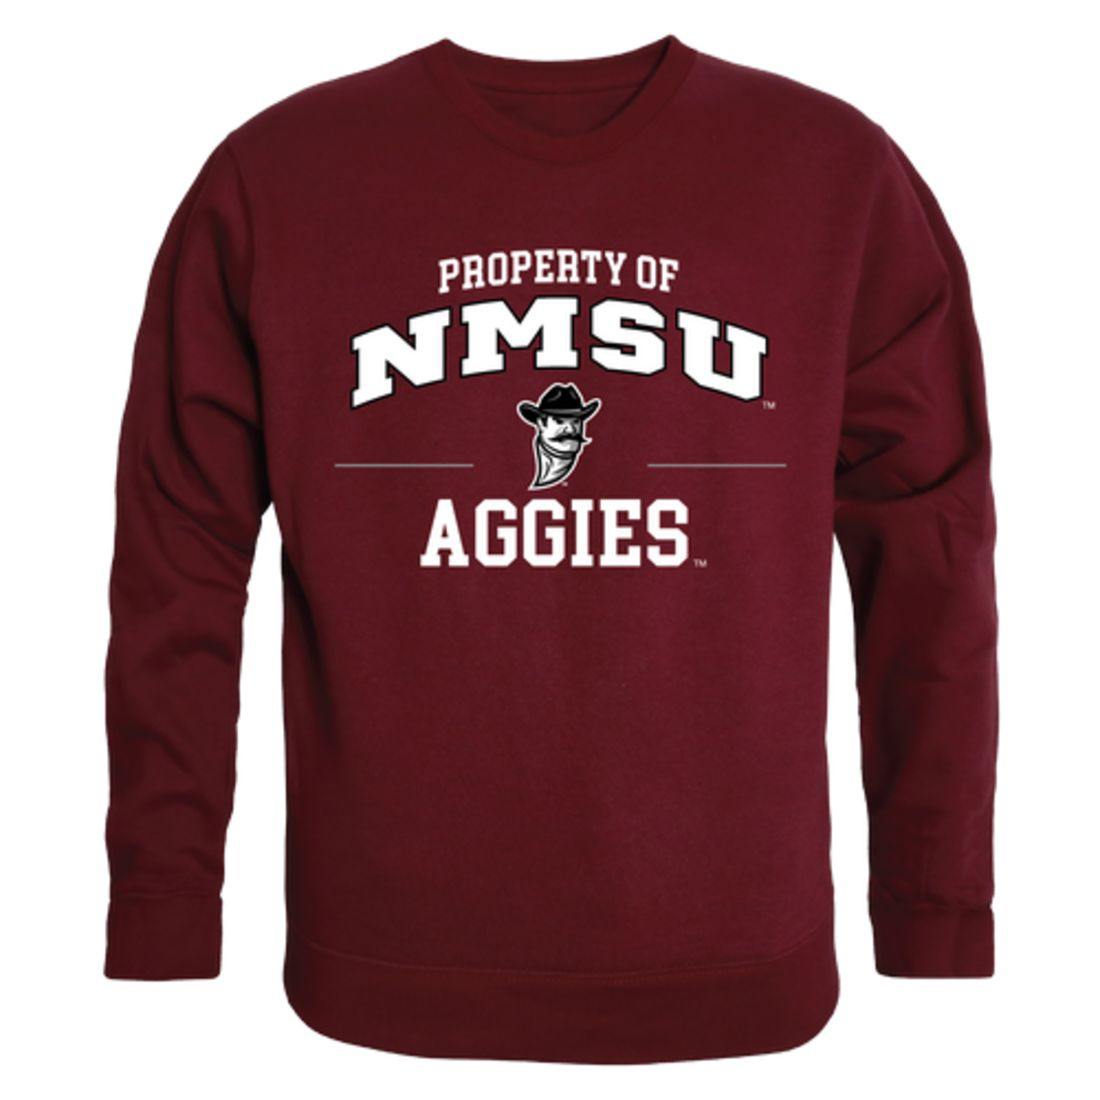 NMSU New Mexico State University Aggies Property Crewneck Pullover Sweatshirt Sweater Maroon-Campus-Wardrobe